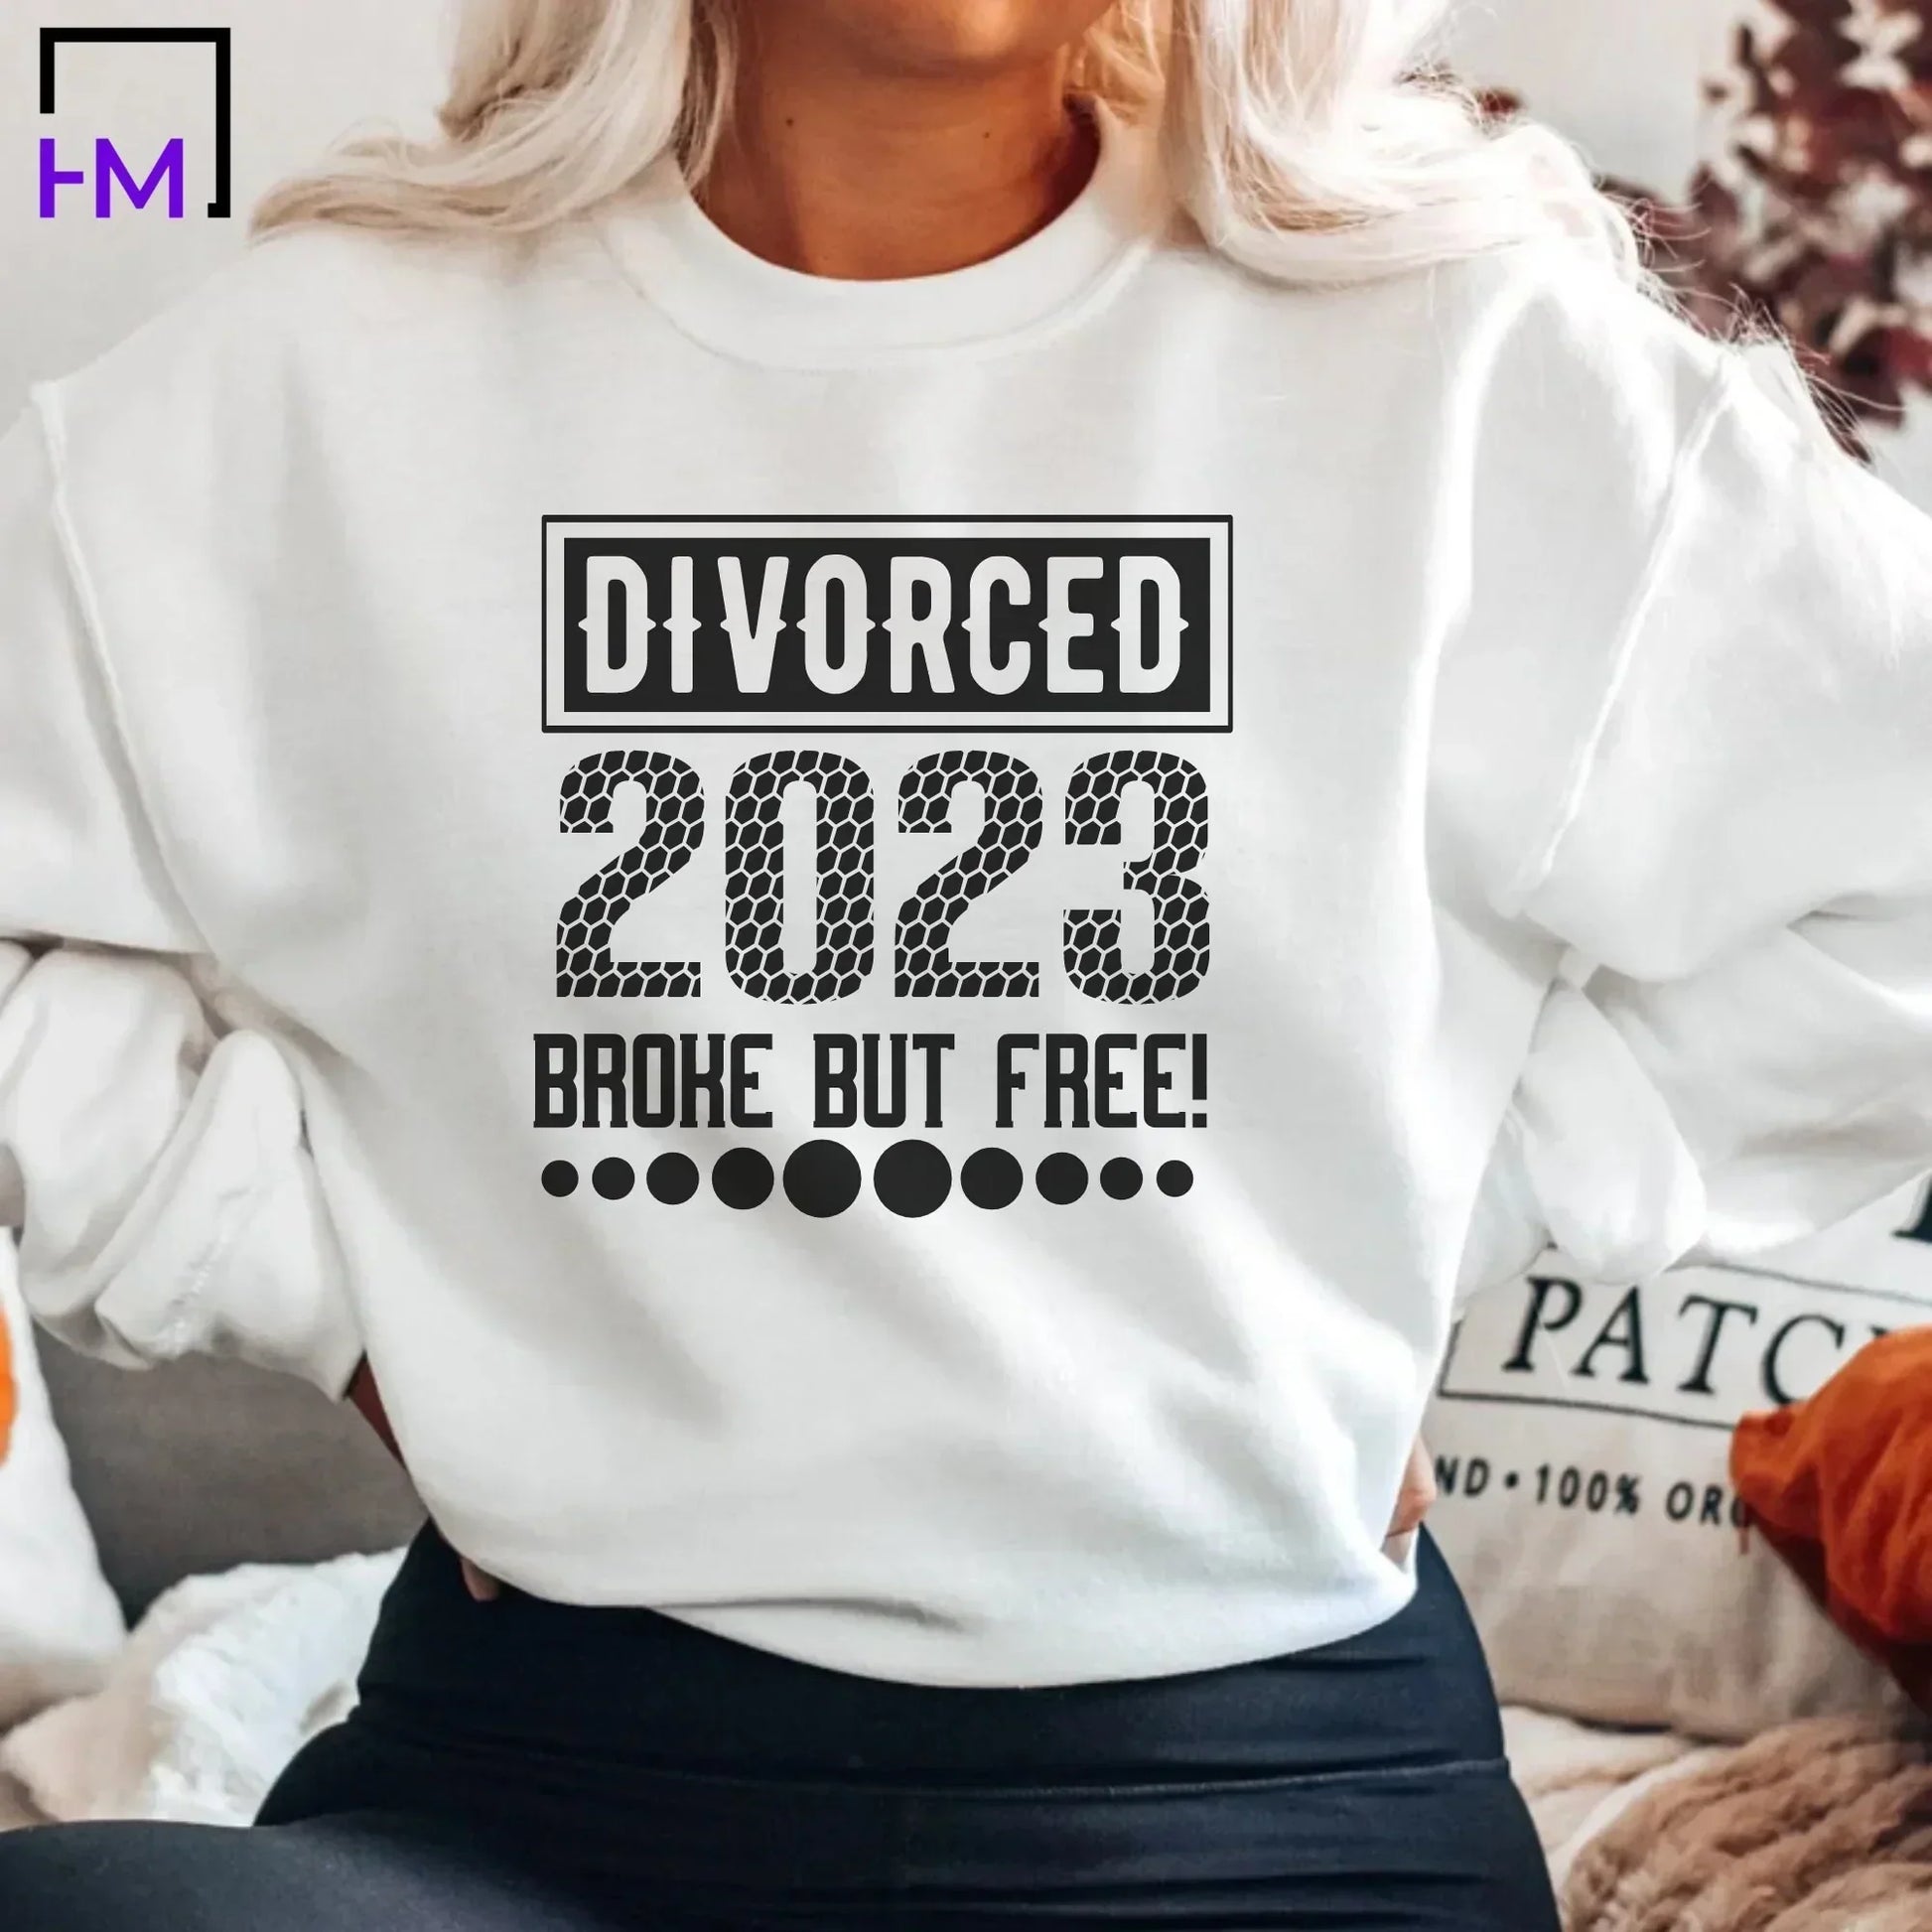 Newly Divorced Shirt, Sarcastic T-Shirt 2023 Divorce, Divorcee Gifts, New Beginnings Gifts, New Beginnings for Divorced, Divorce Party Gift HMDesignStudioUS